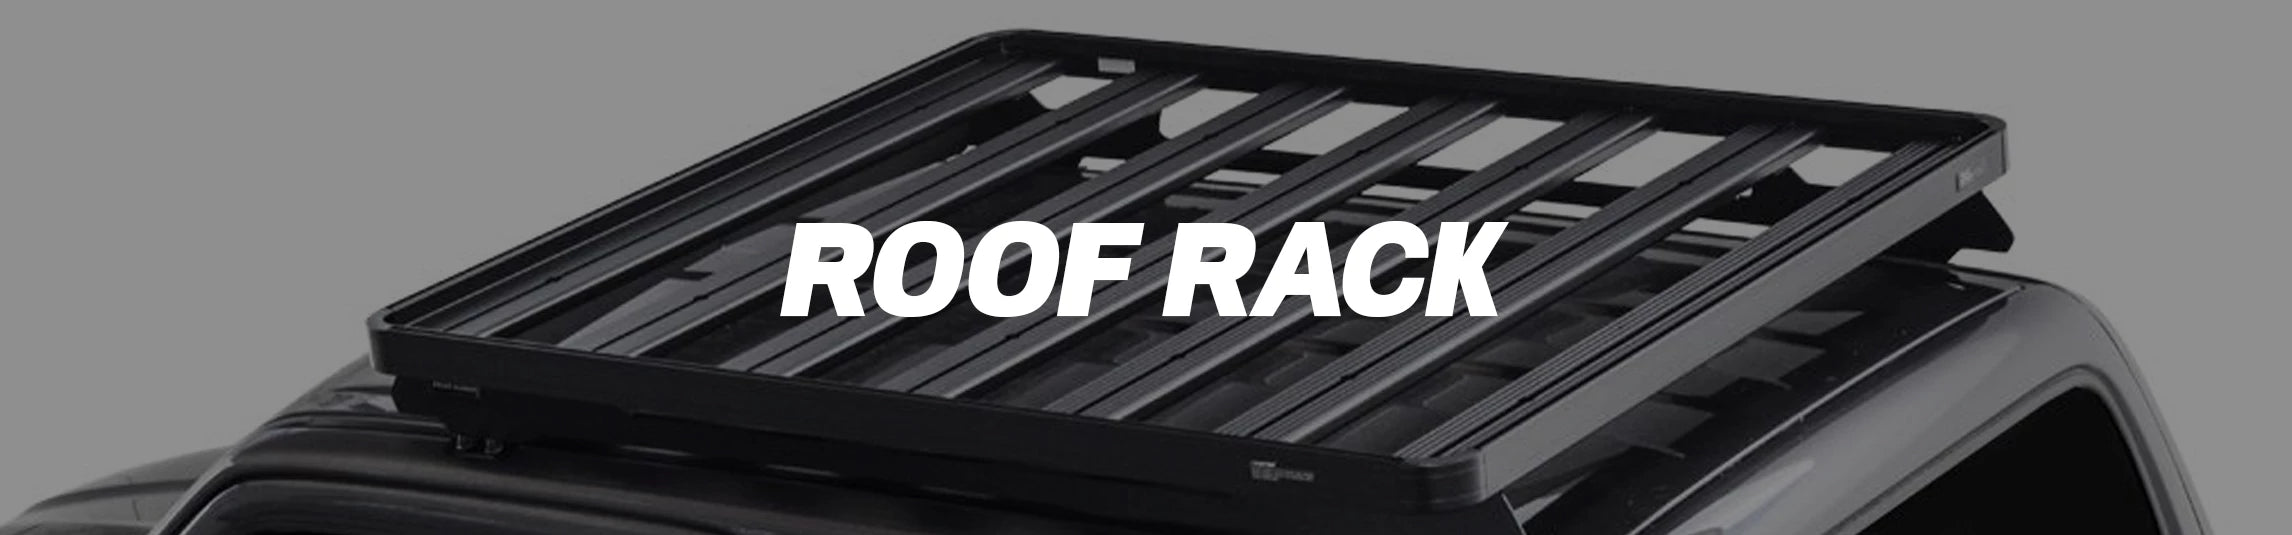 Roof Rack - Autobacs India